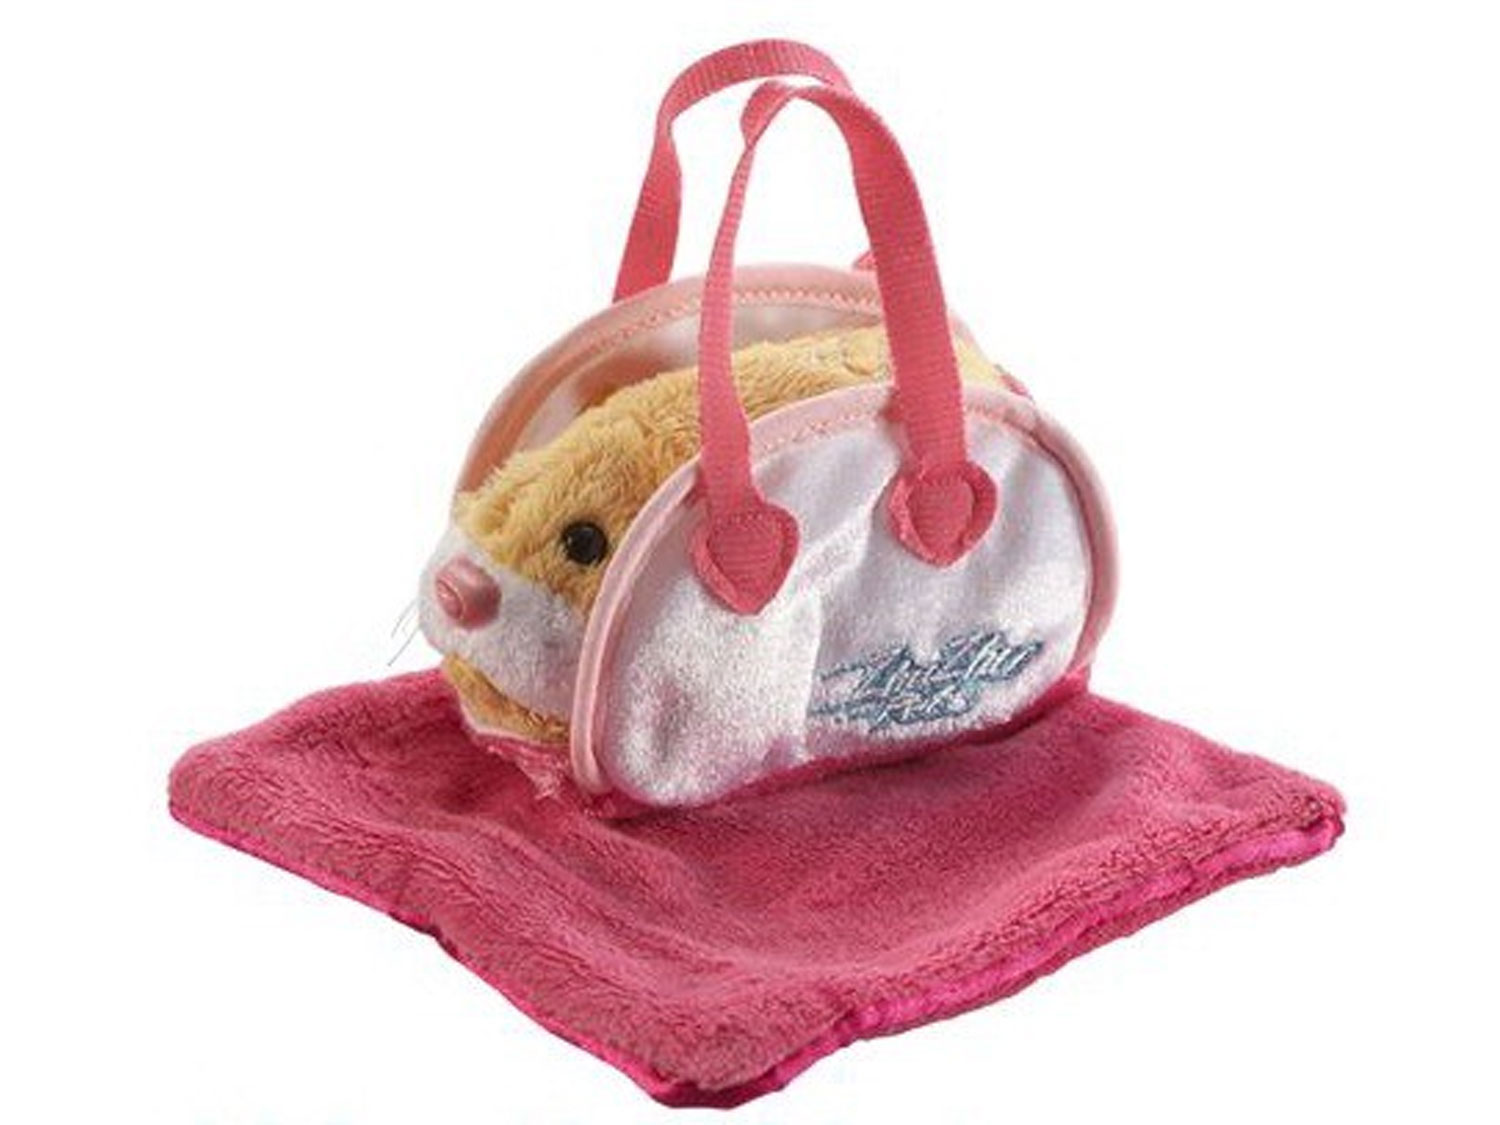 Pet hamster. Хомячок в сумочке игрушка. Сумочка для хомяка. Игрушка хомяк в переноске. Игрушка хомяк в сумке.